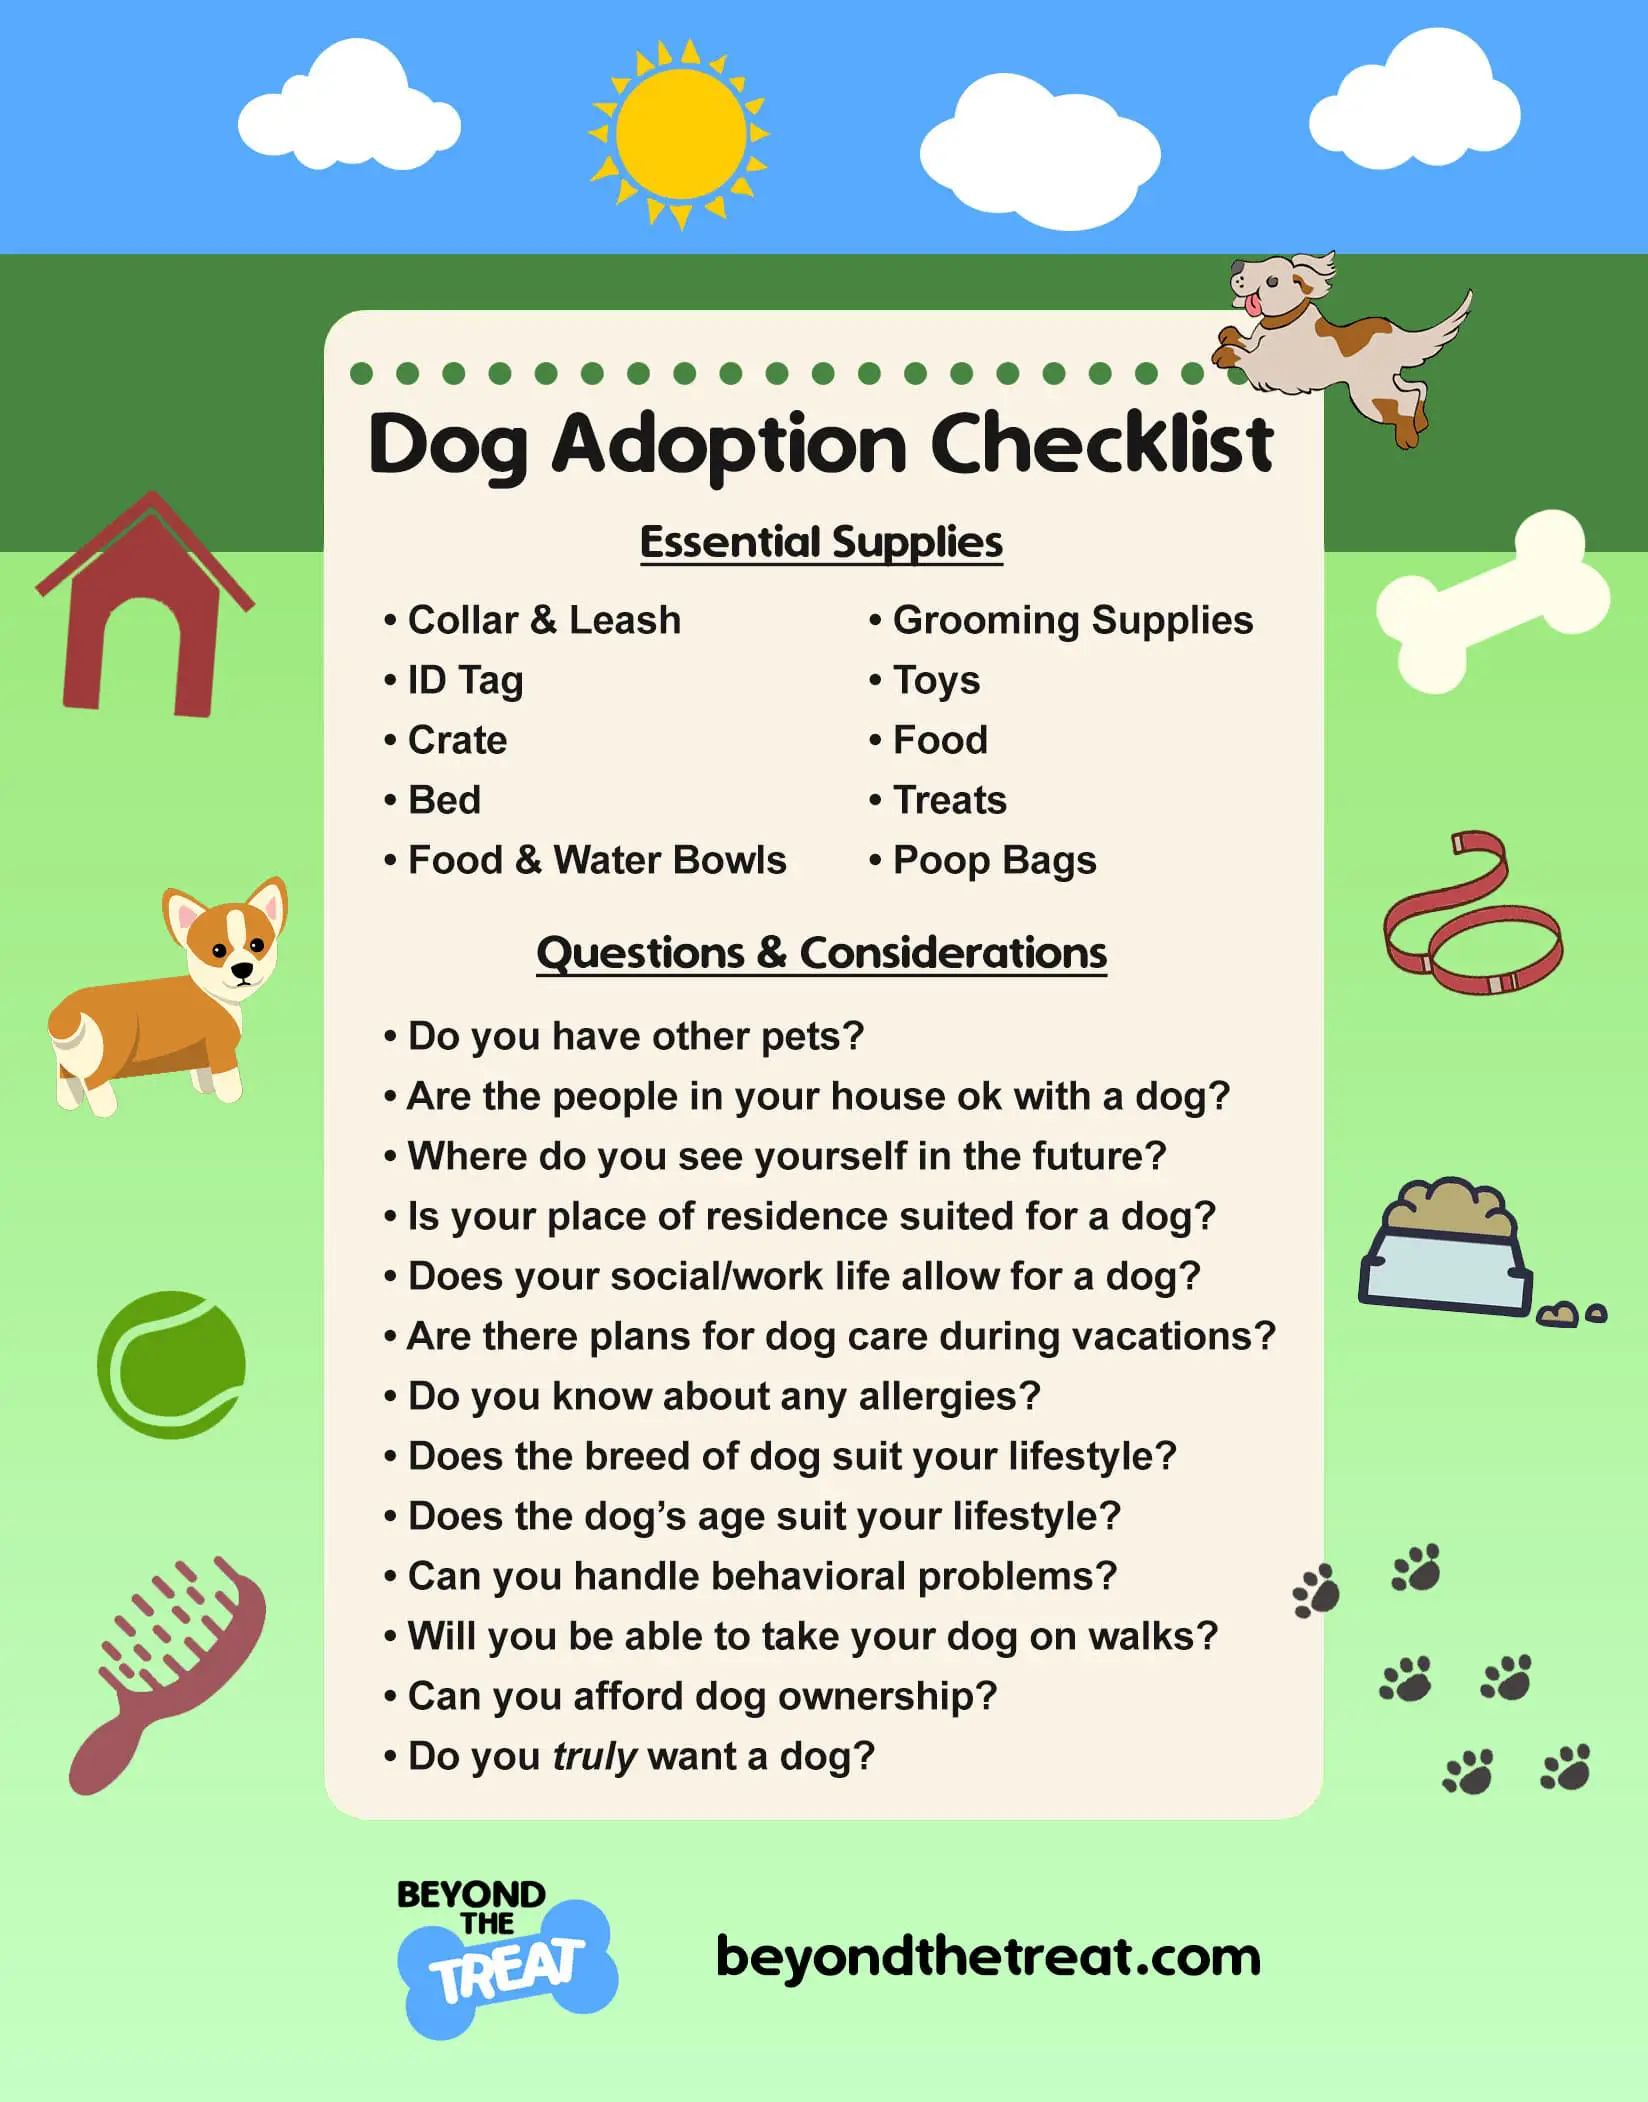 Dog adoption checklist